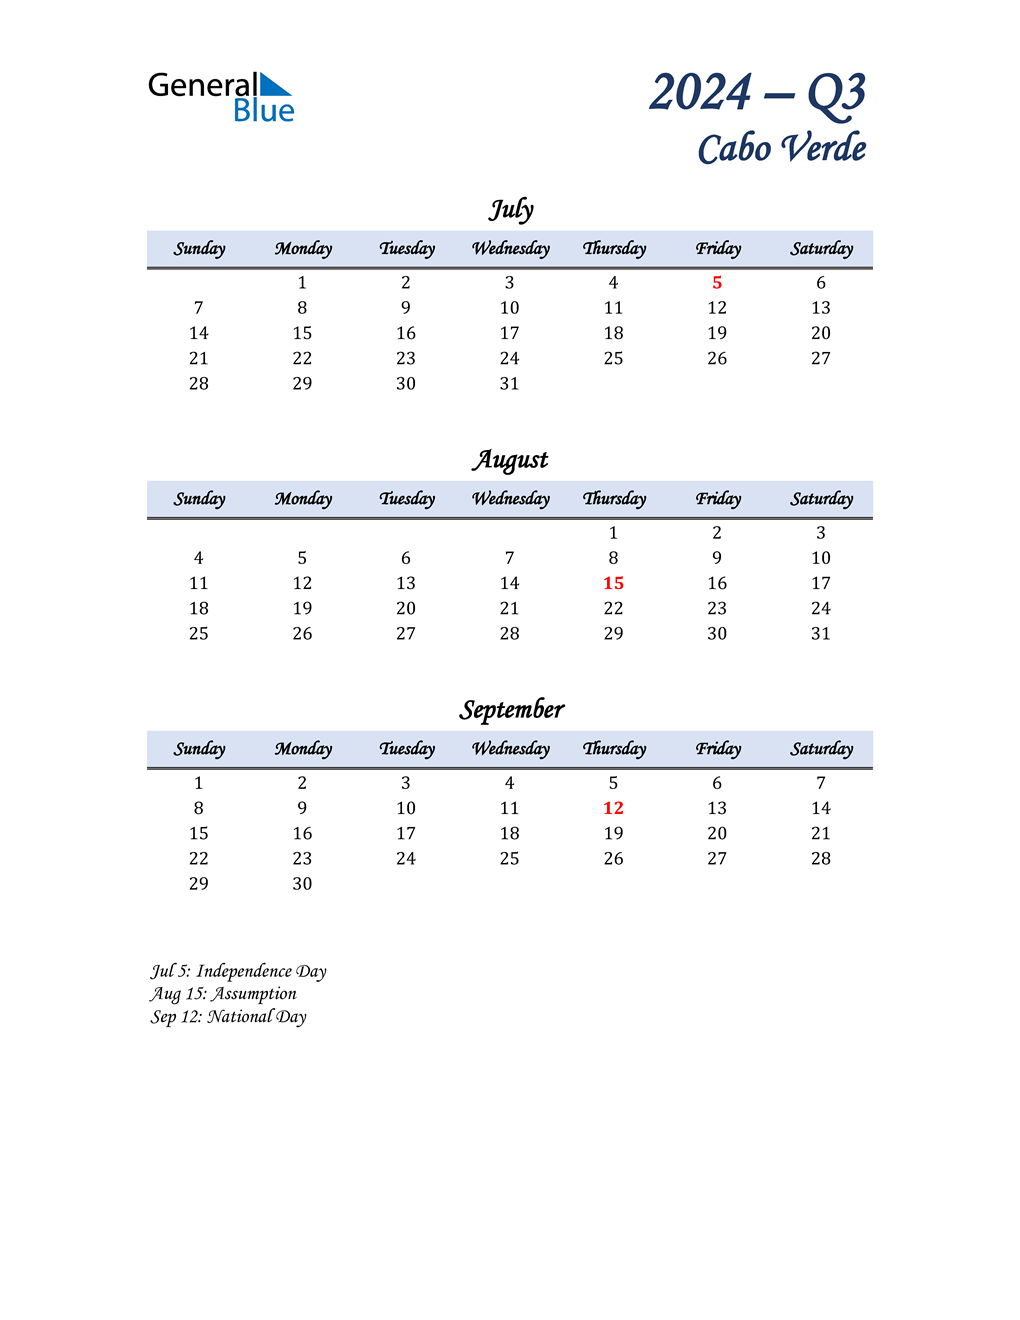  July, August, and September Calendar for Cabo Verde